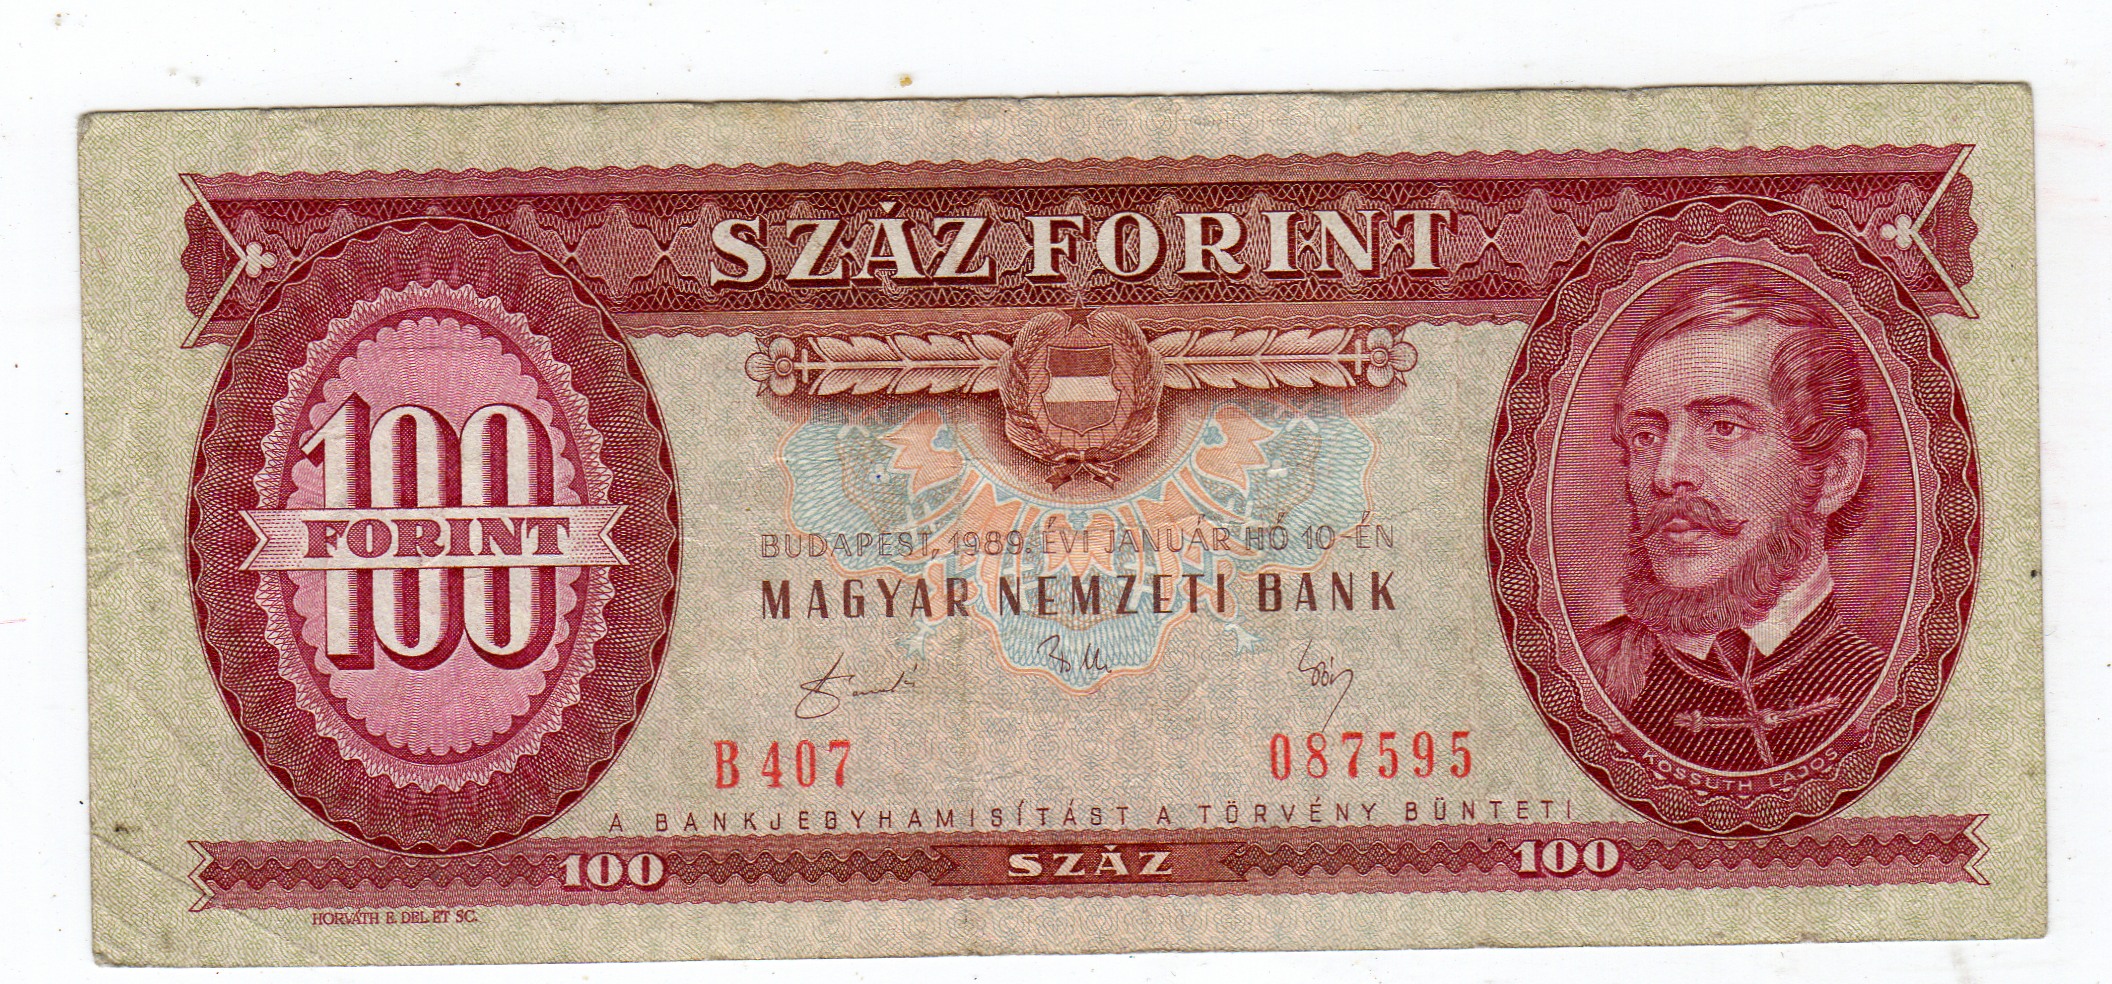 100 Forint kv1 1989